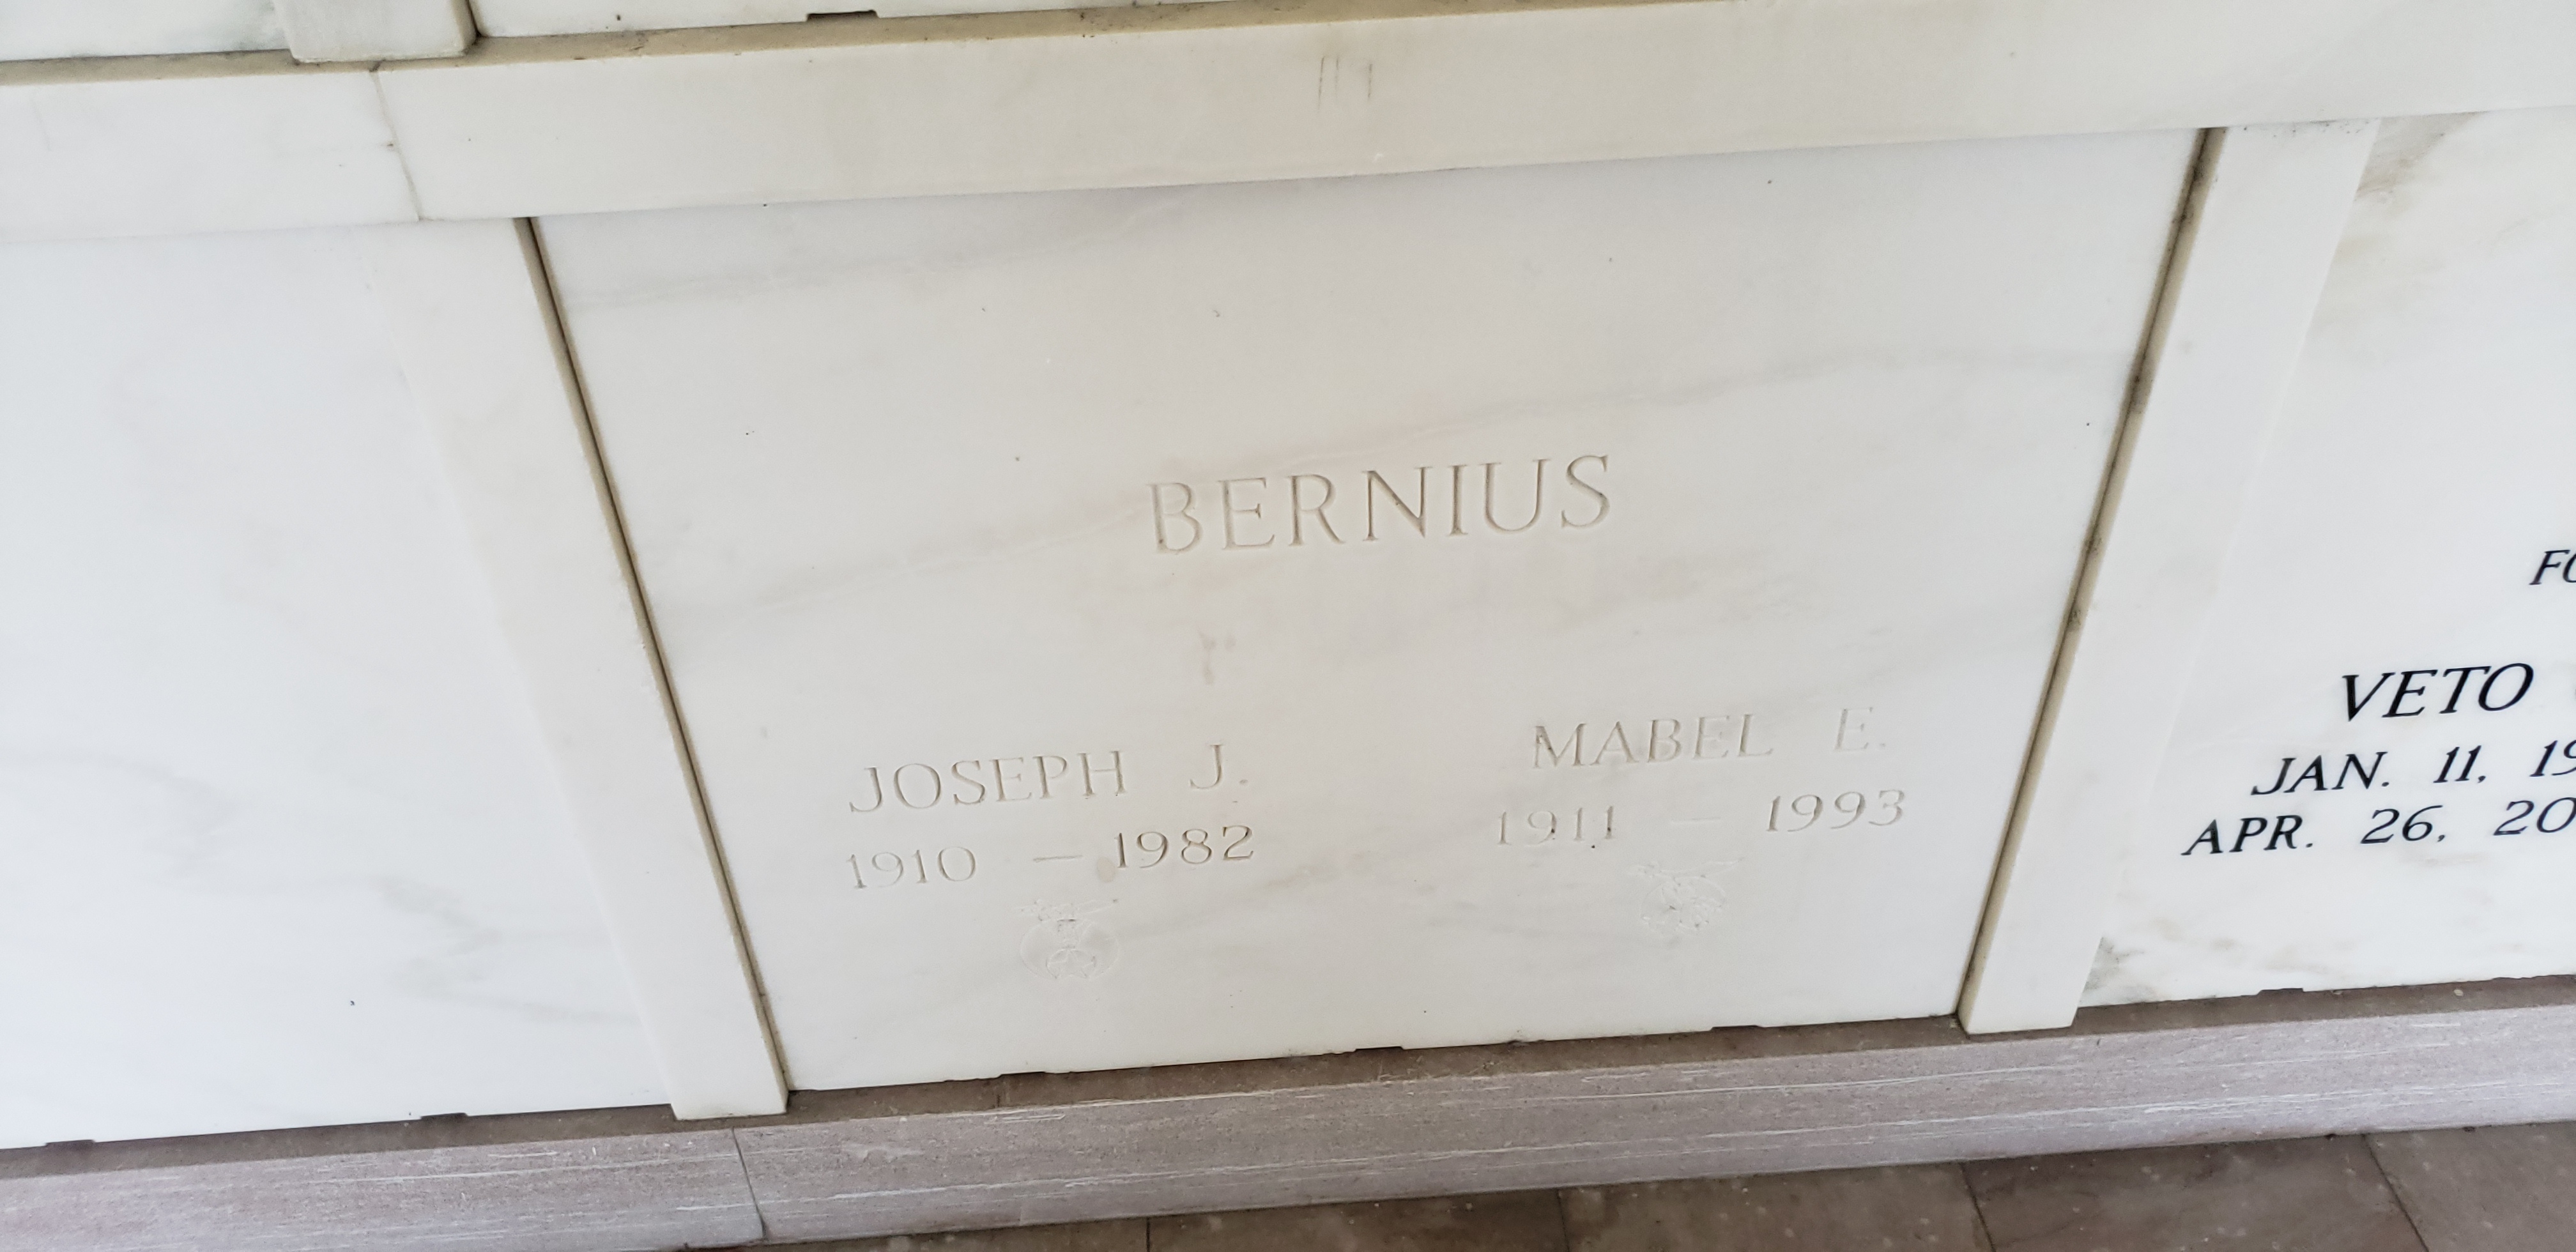 Joseph J Bernius